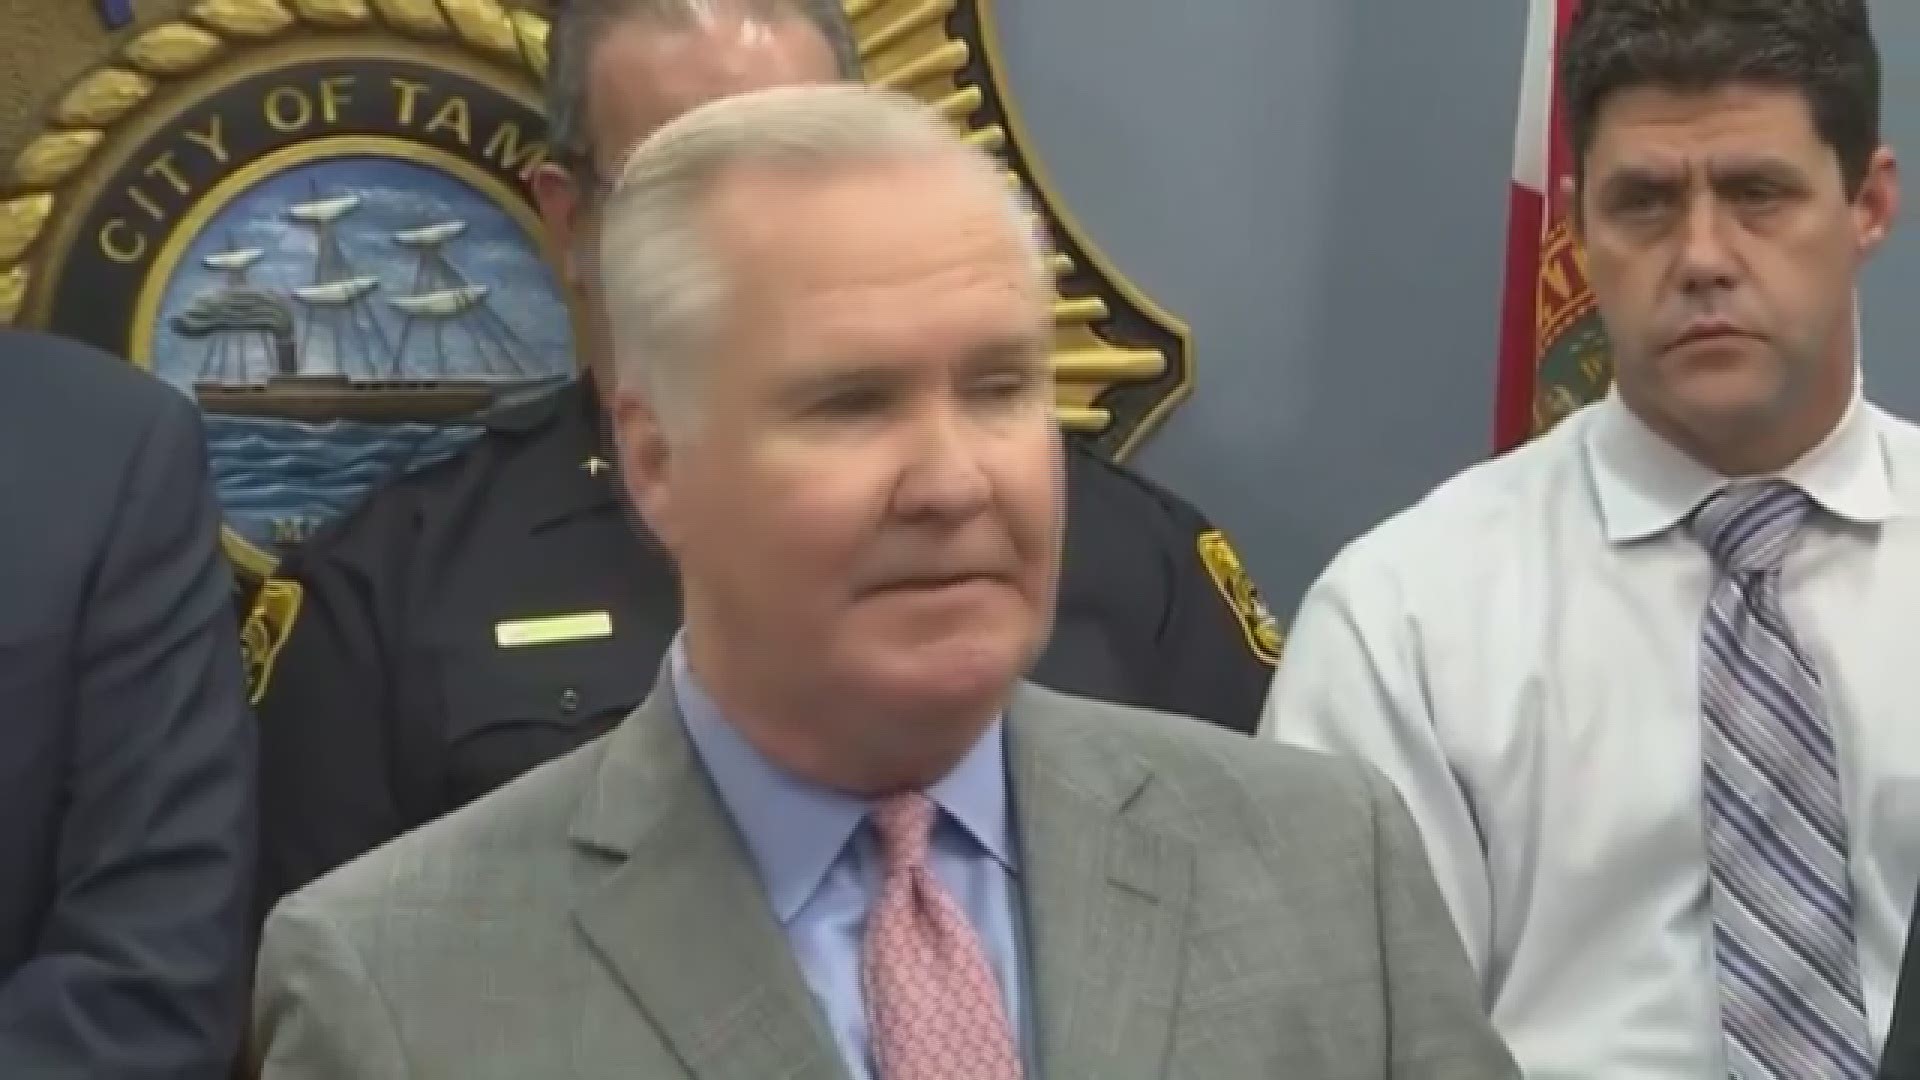 'Justice has been served': Bob Buckhorn reacts to arrest of Seminole Heights murder suspect